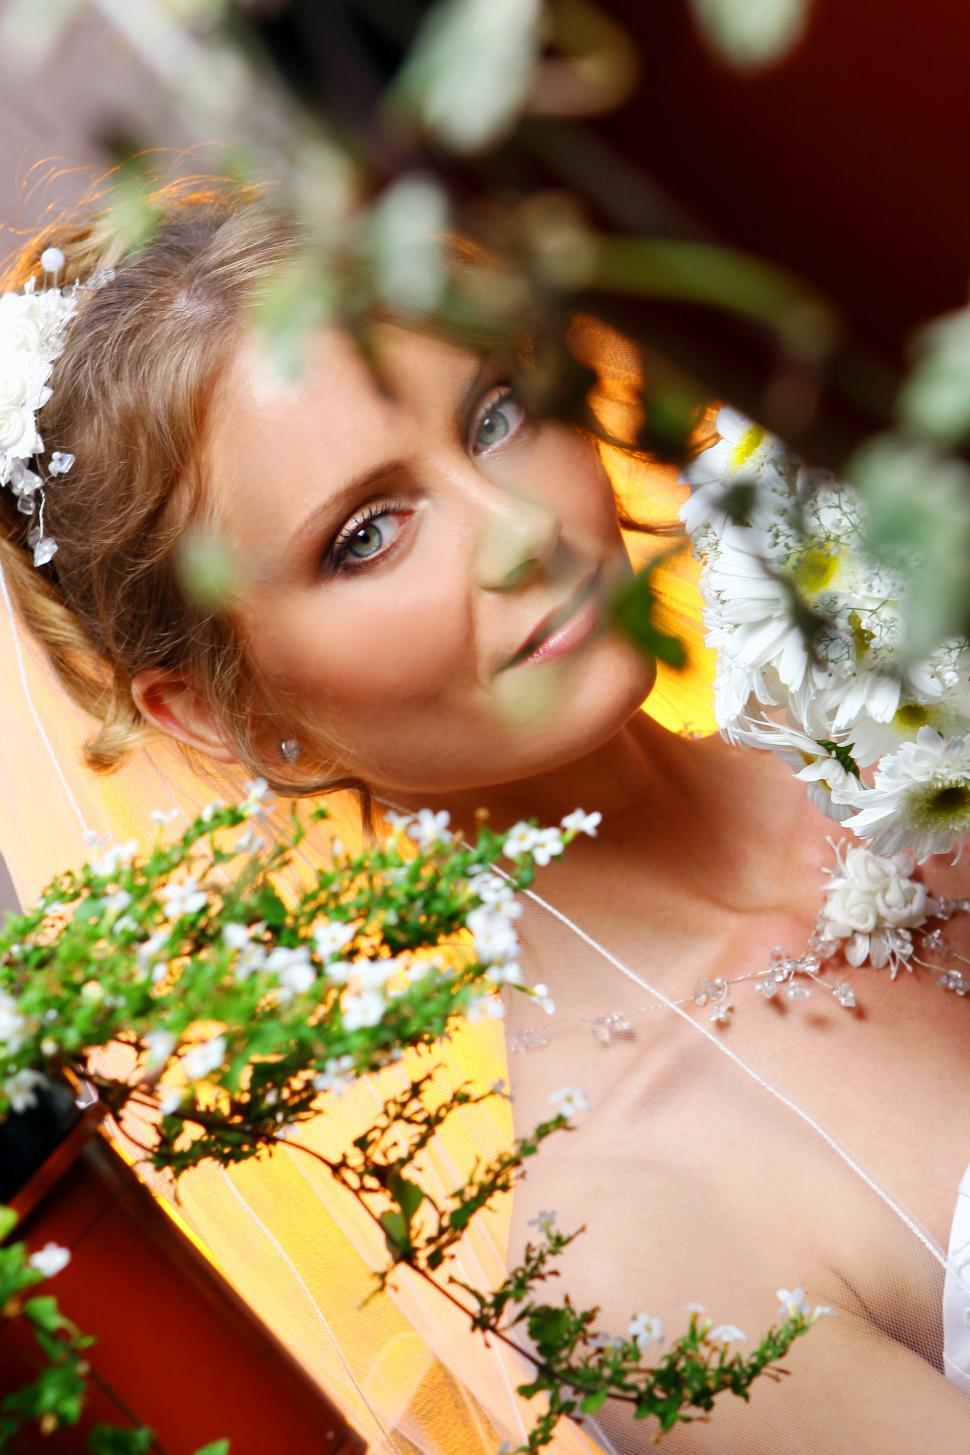 Free Image of bride looking at camera through plants 